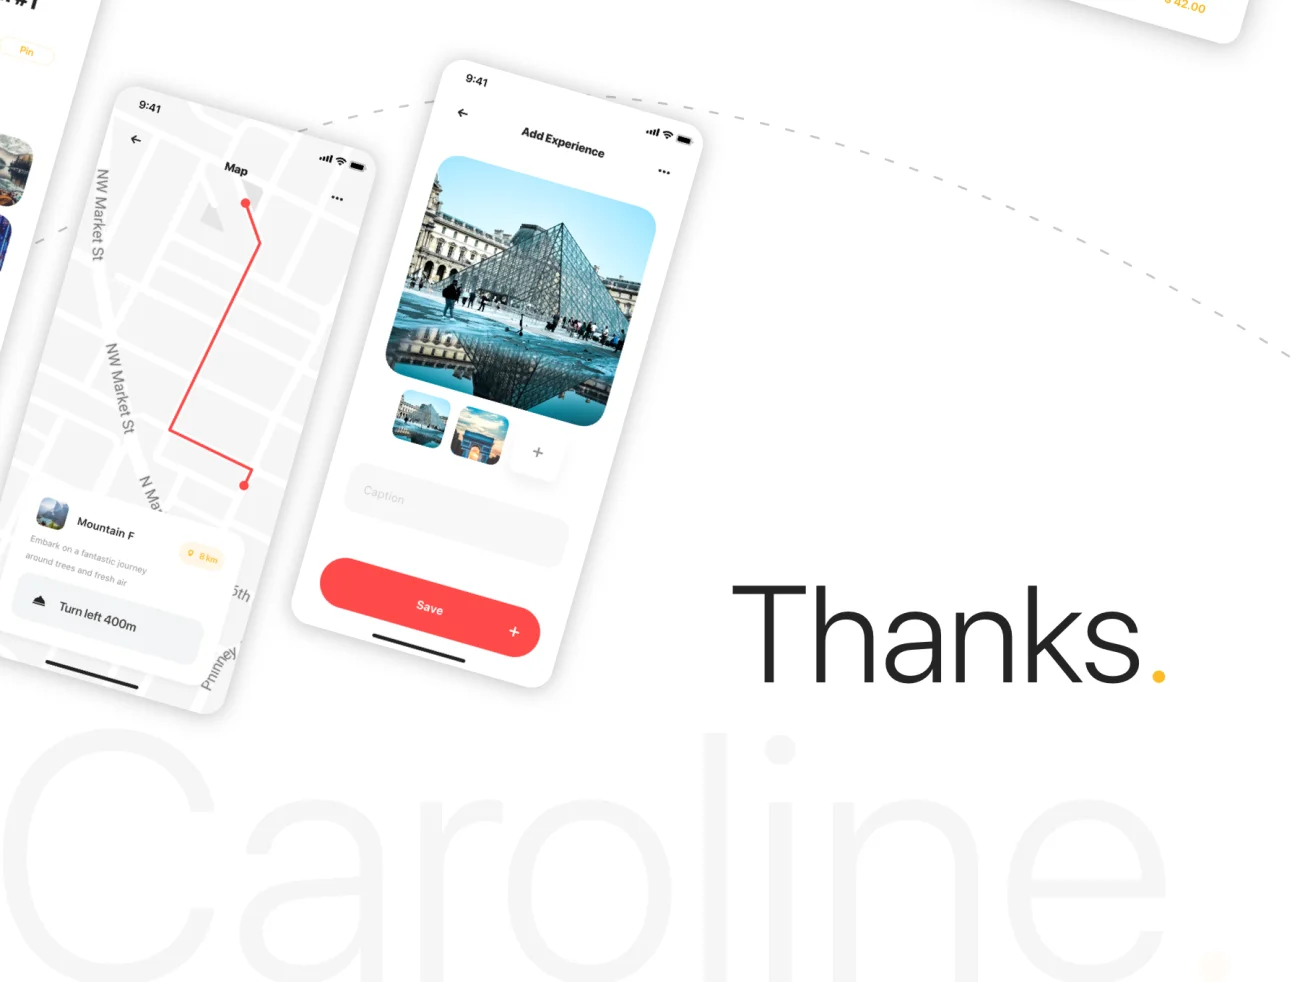 Caroline - Travel App UI Kit figma 卡罗琳-旅游应用程序用户界面套件figma-UI/UX-到位啦UI